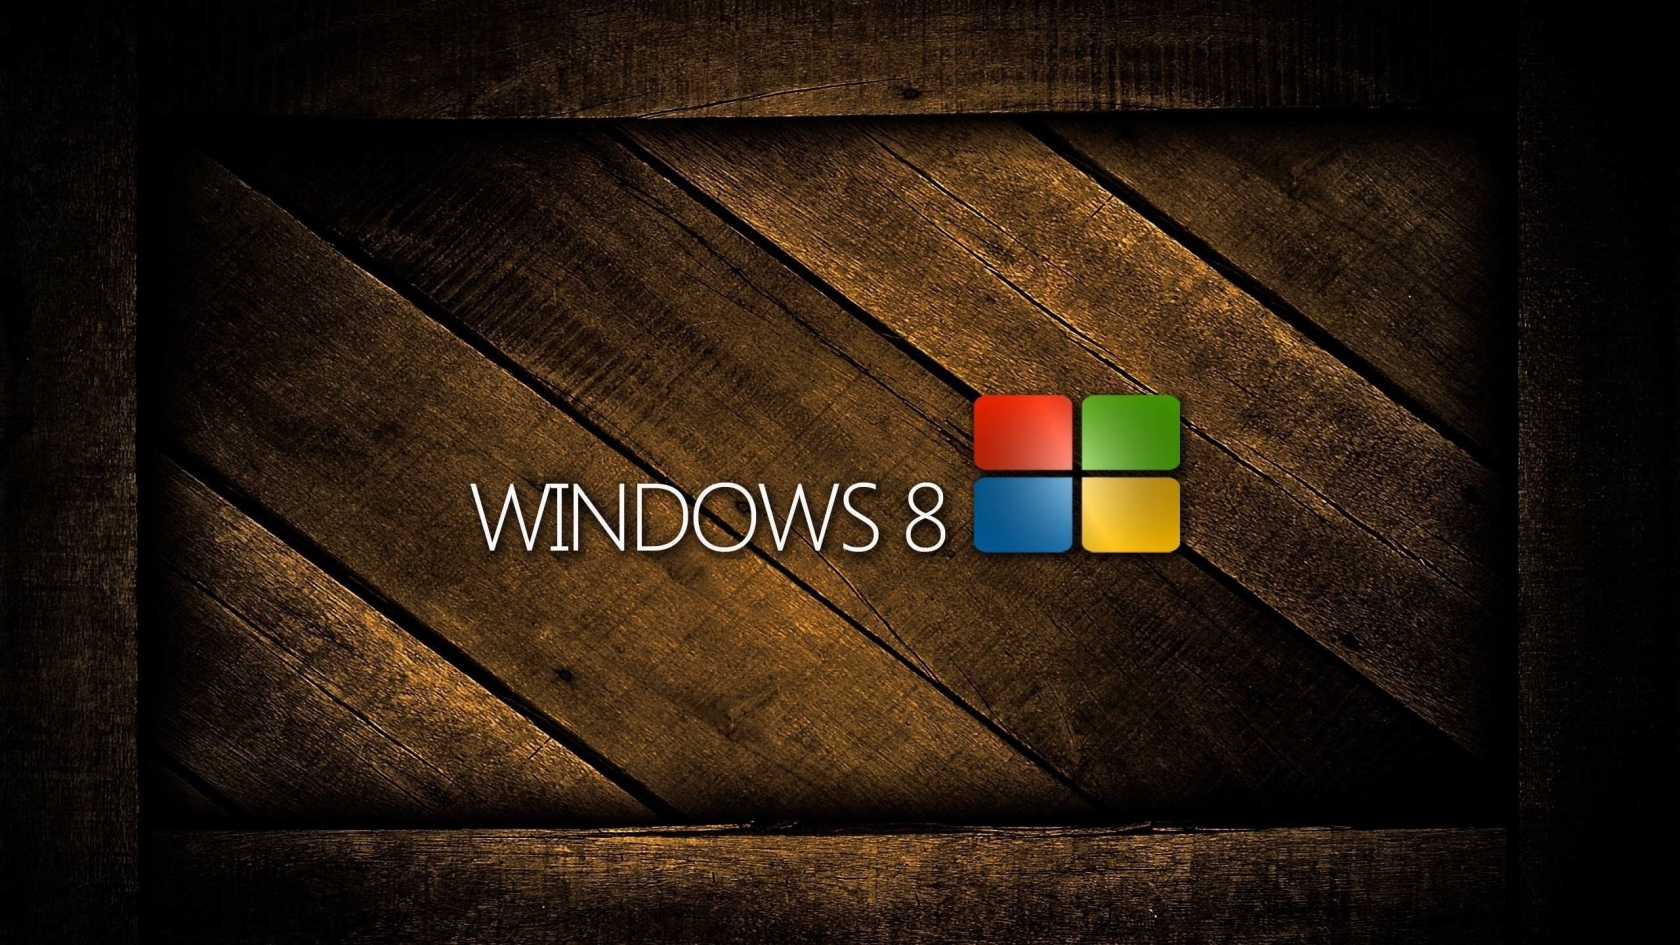 Windows 8 Wood for 1680 x 945 HDTV resolution